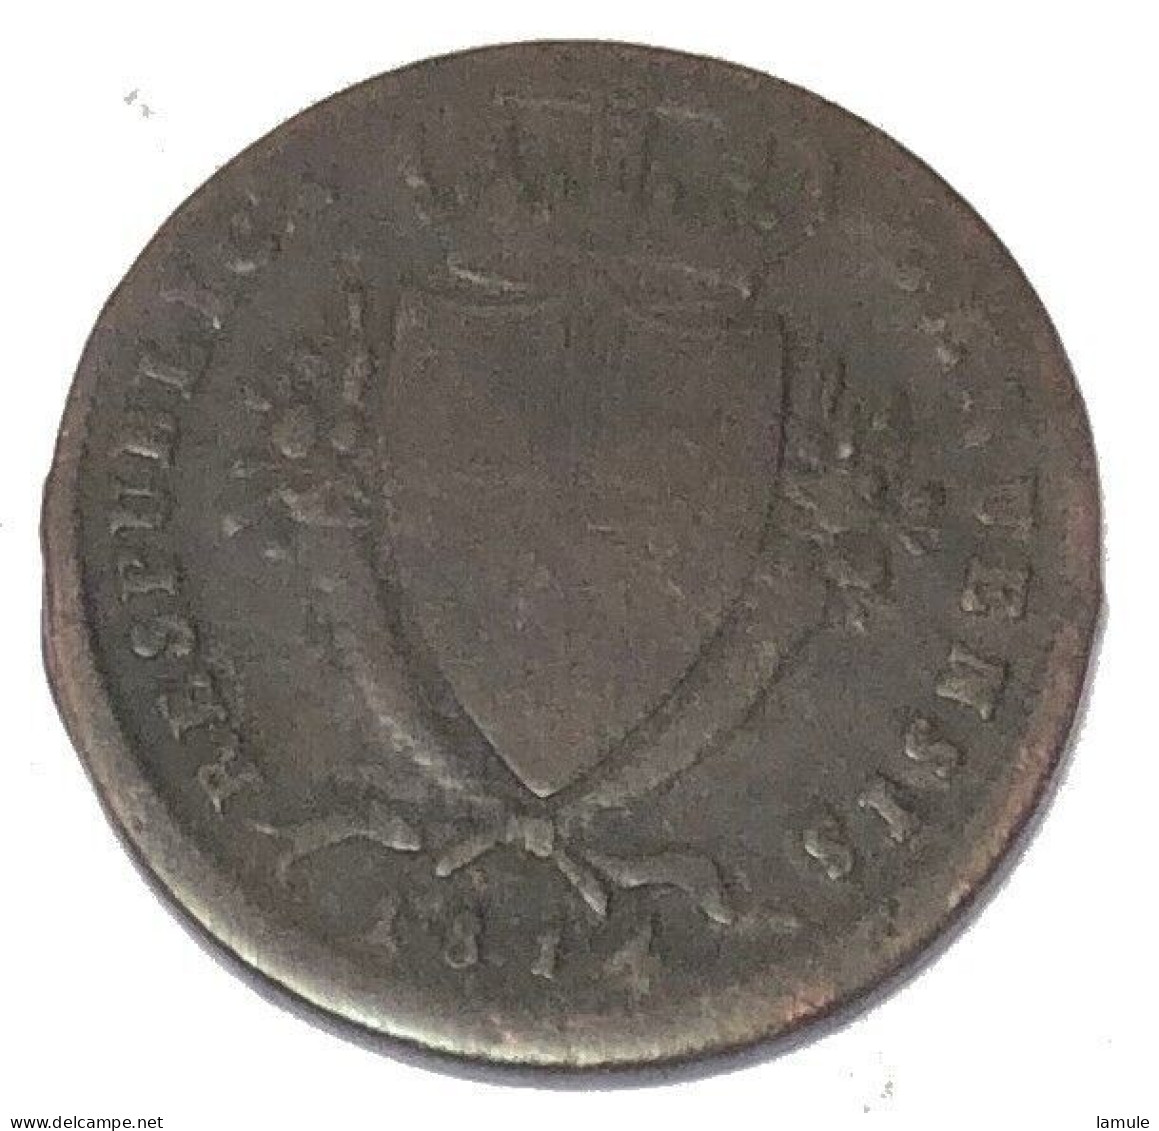 2 Soldi, République Genes, Italie 1813 M - Genova